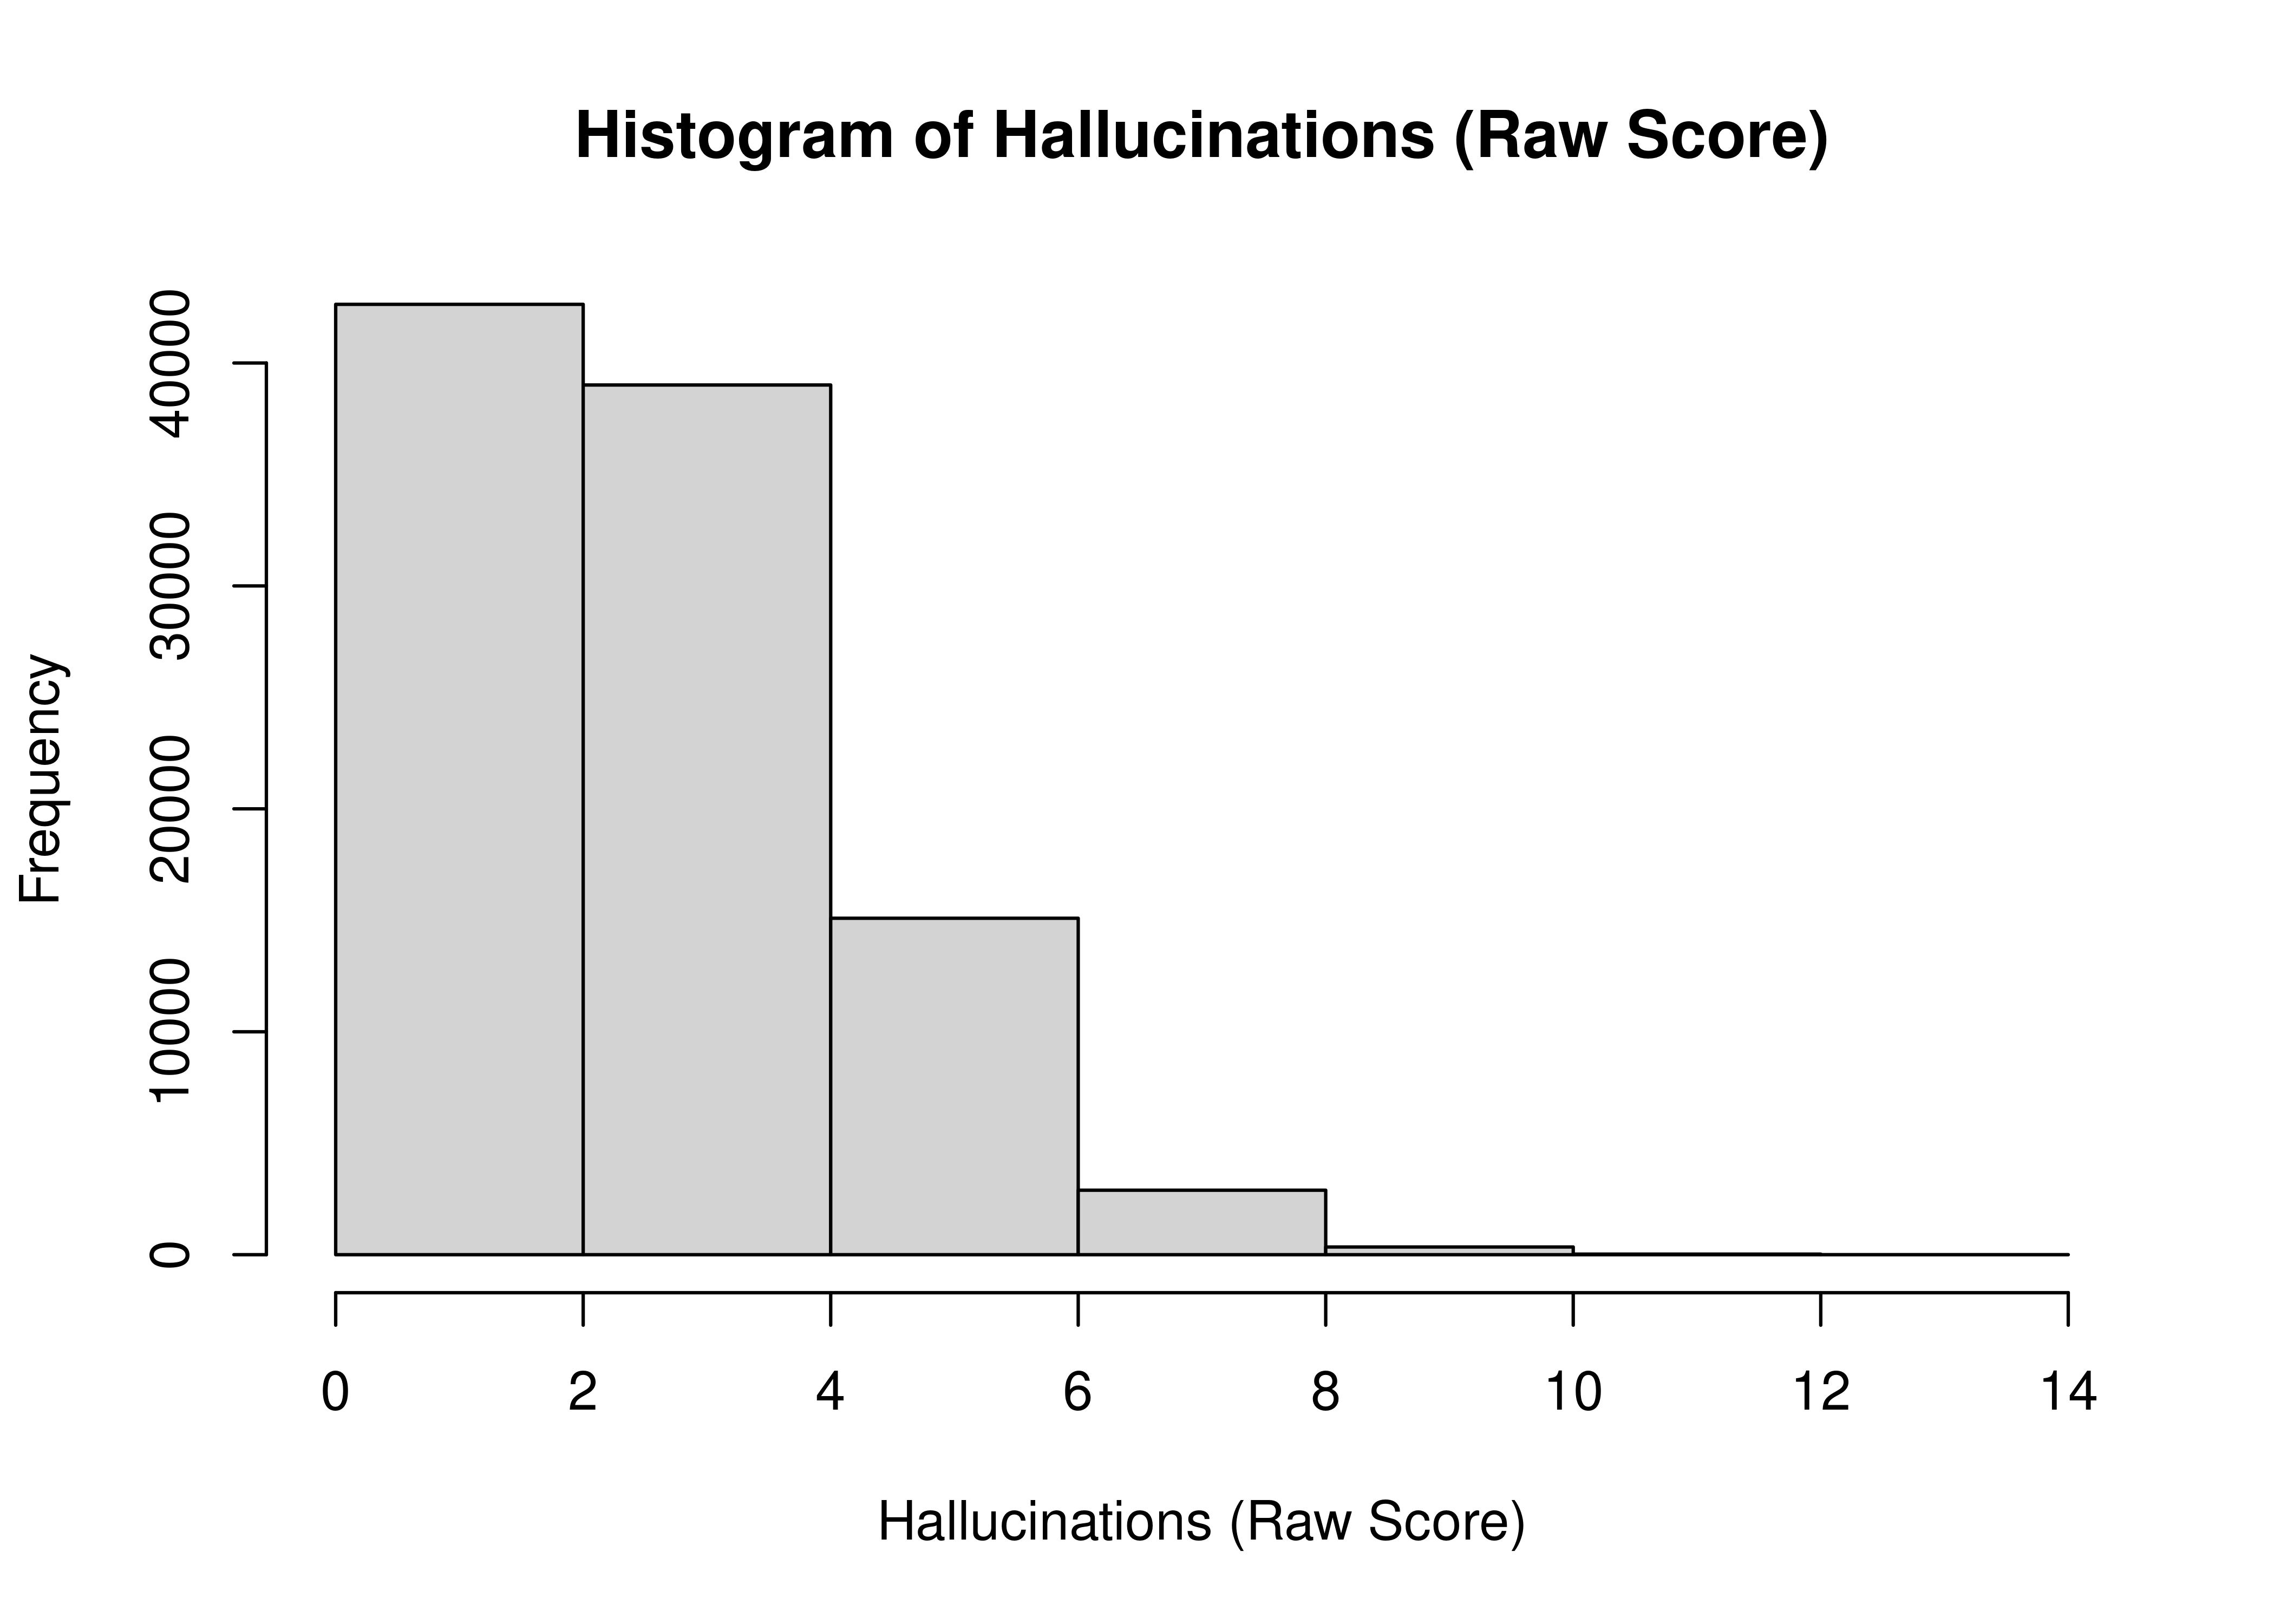 Histogram of Hallucinations (Raw Score).